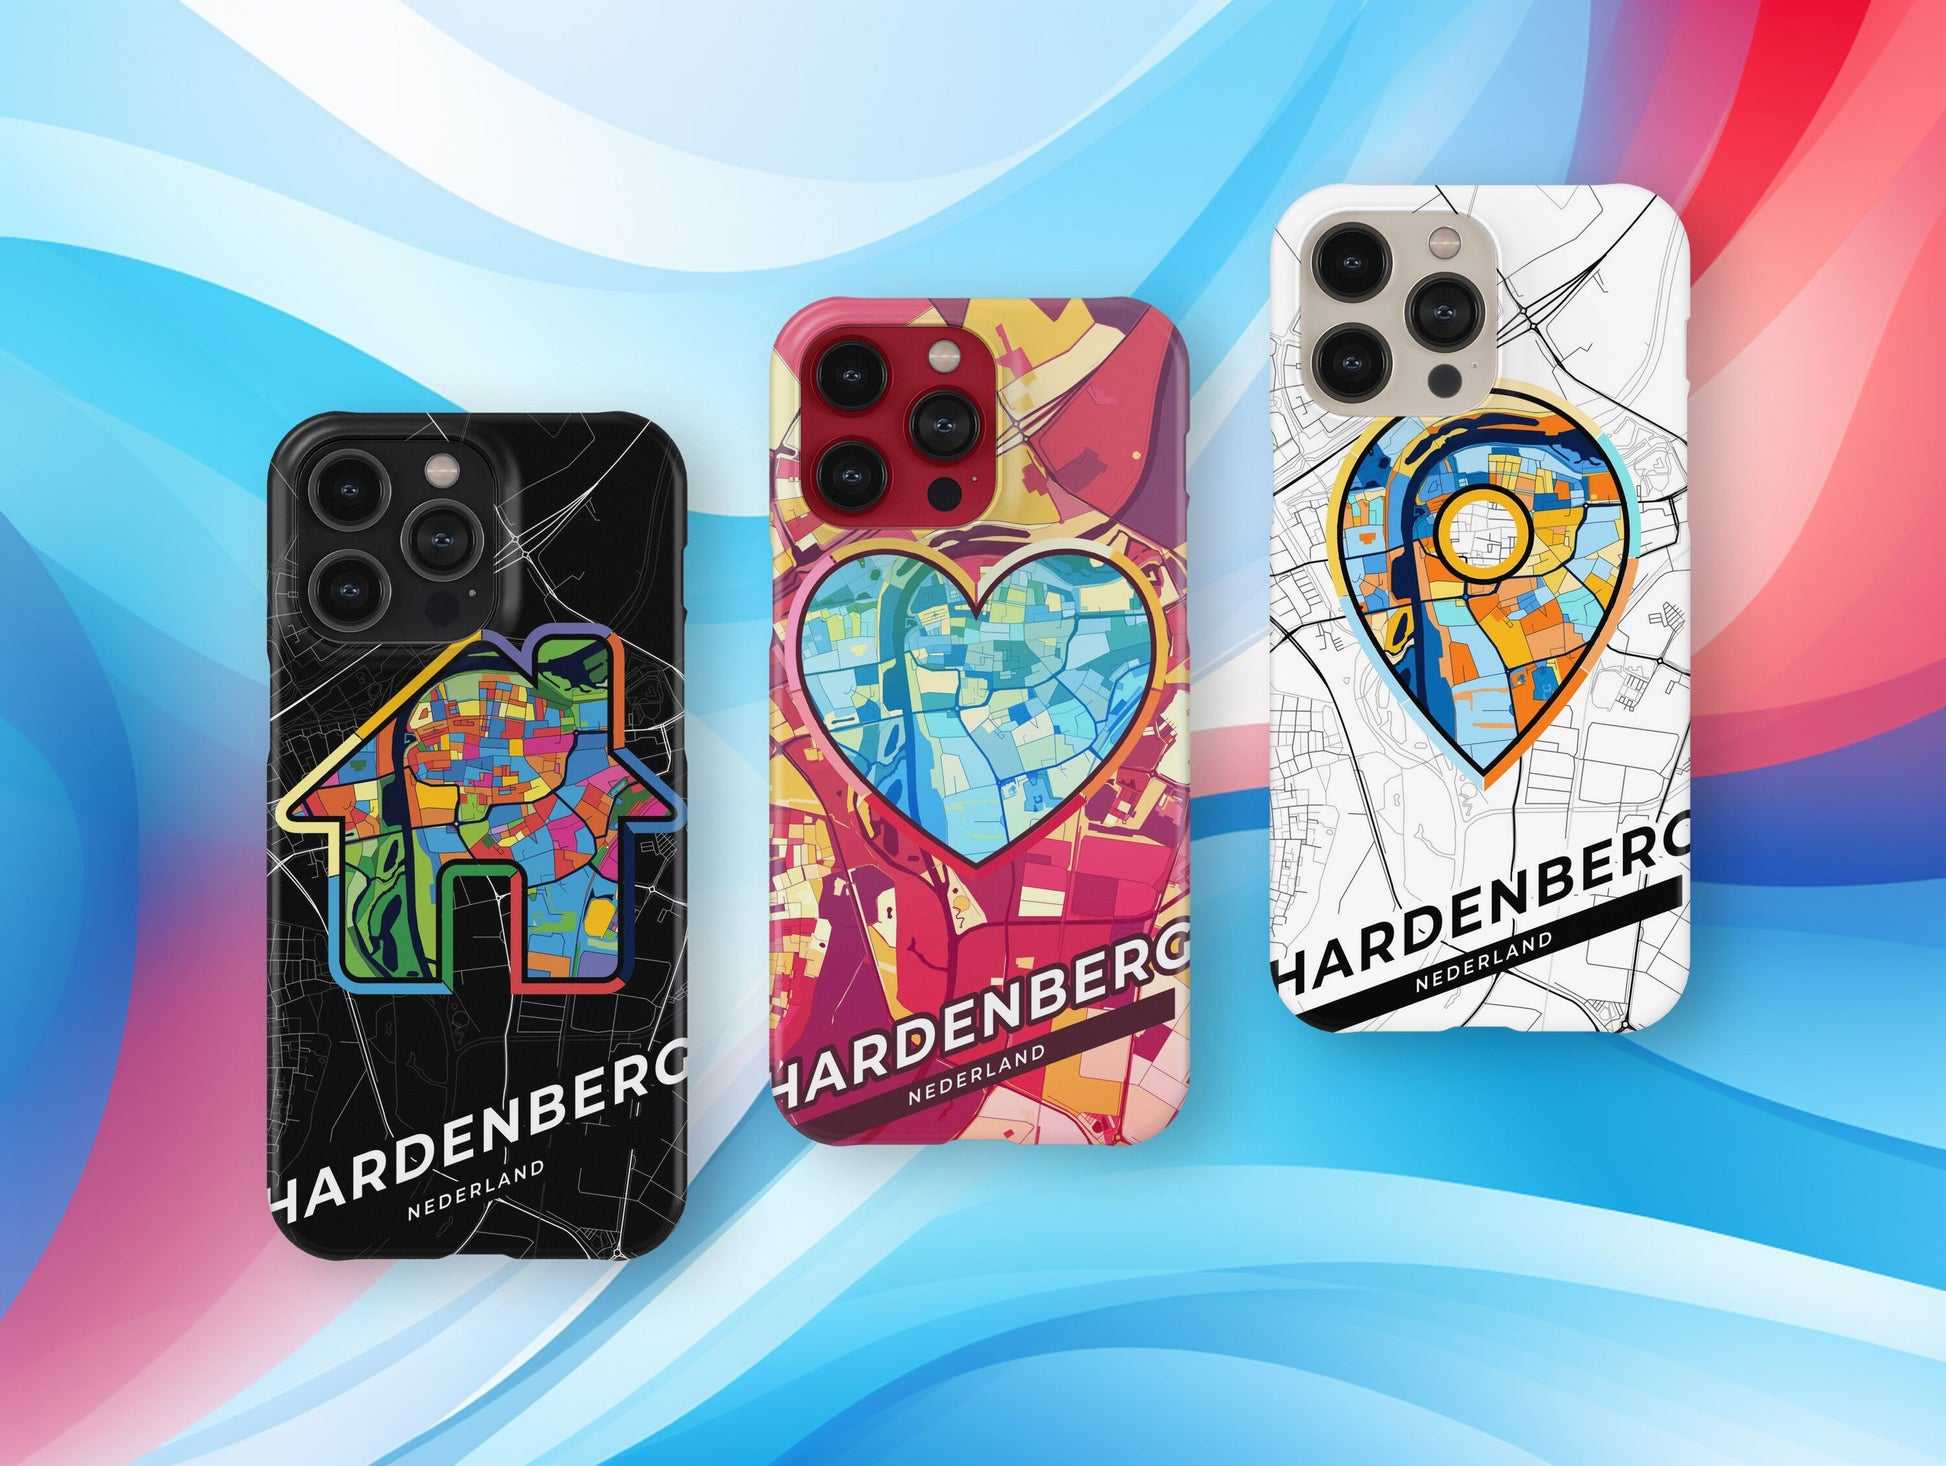 Hardenberg Netherlands slim phone case with colorful icon. Birthday, wedding or housewarming gift. Couple match cases.